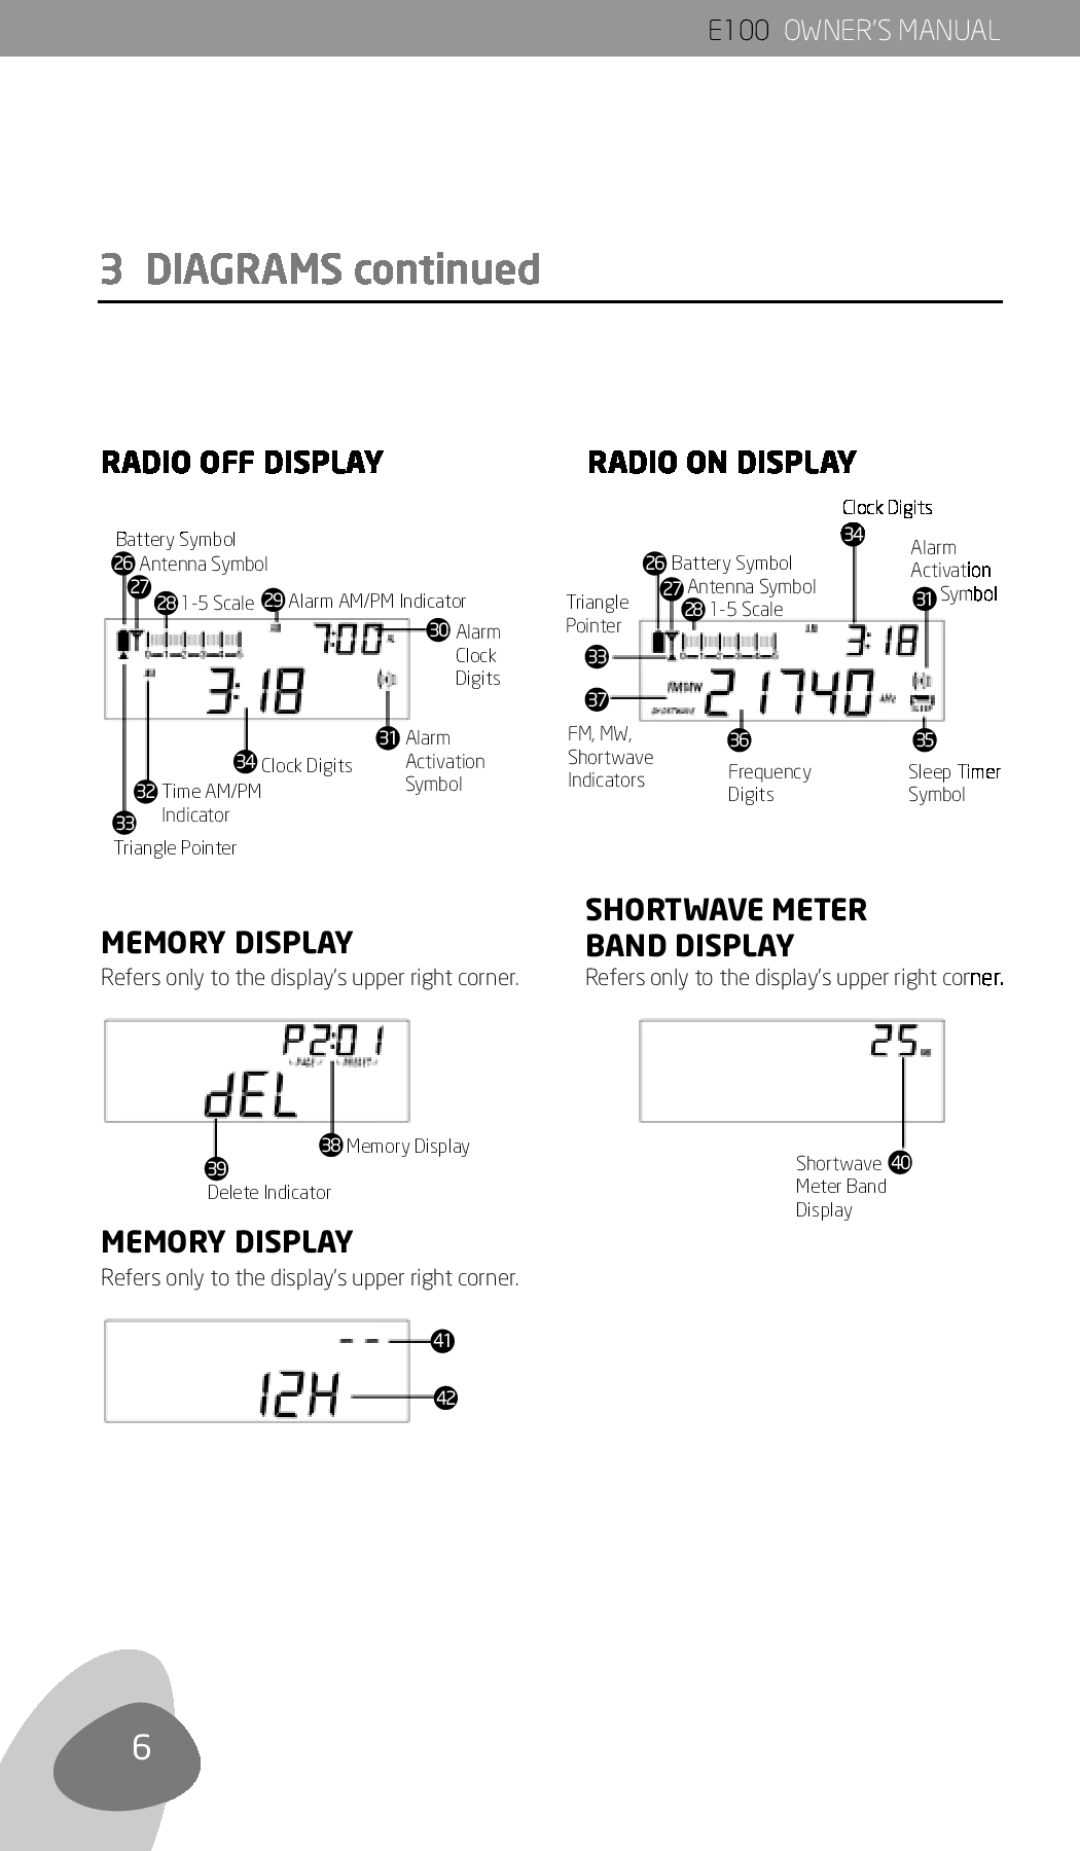 Eton E100 DIAGRAMS continued, Radio Off Display, Memory Display, Radio On Display, Shortwave Meter Band Display 